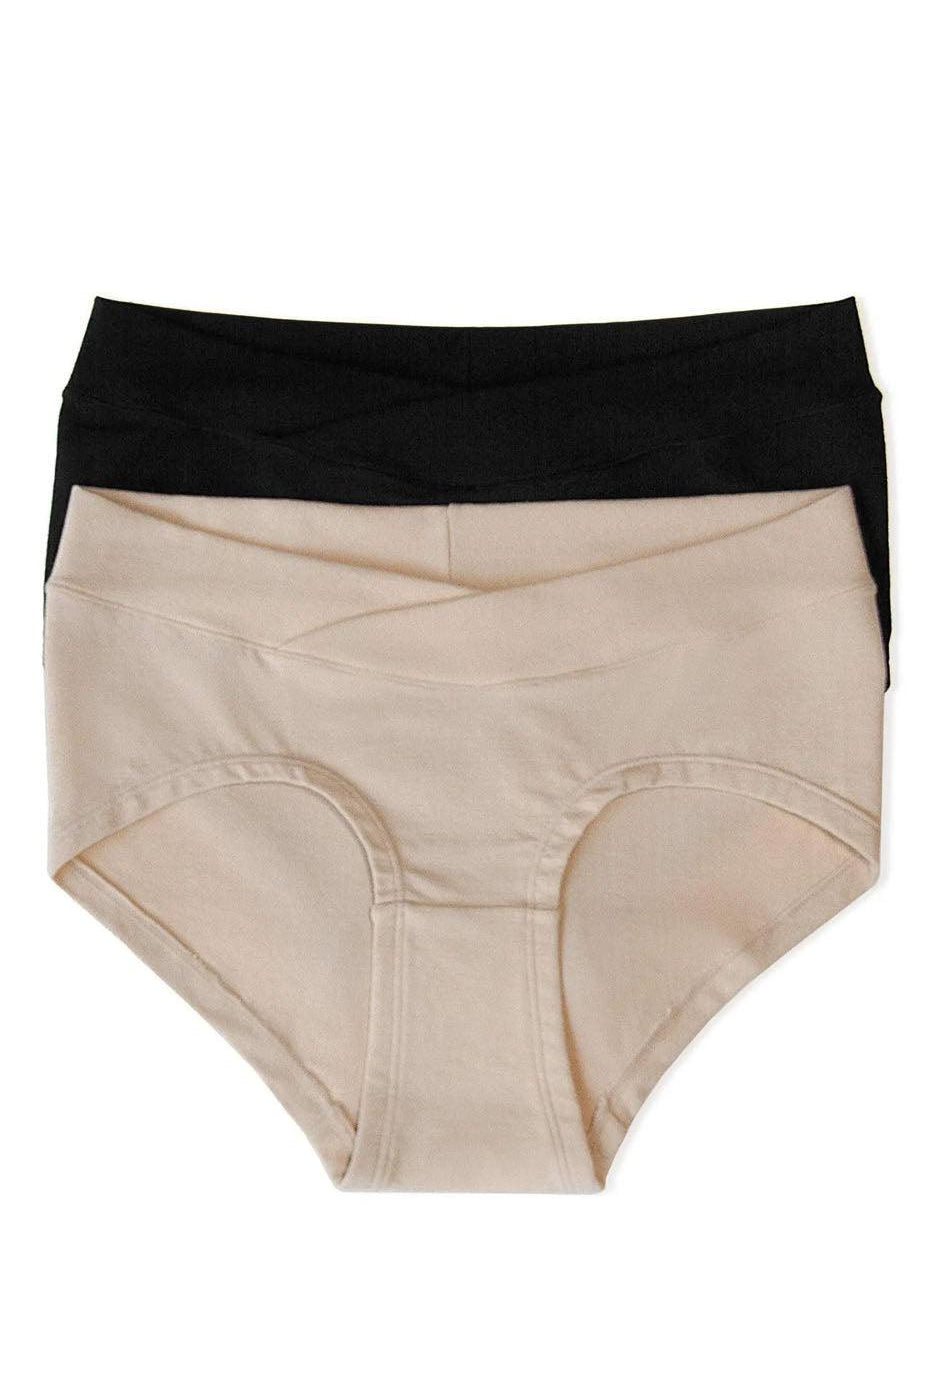 Kindred Bravely High Waist Postpartum Underwear Uganda